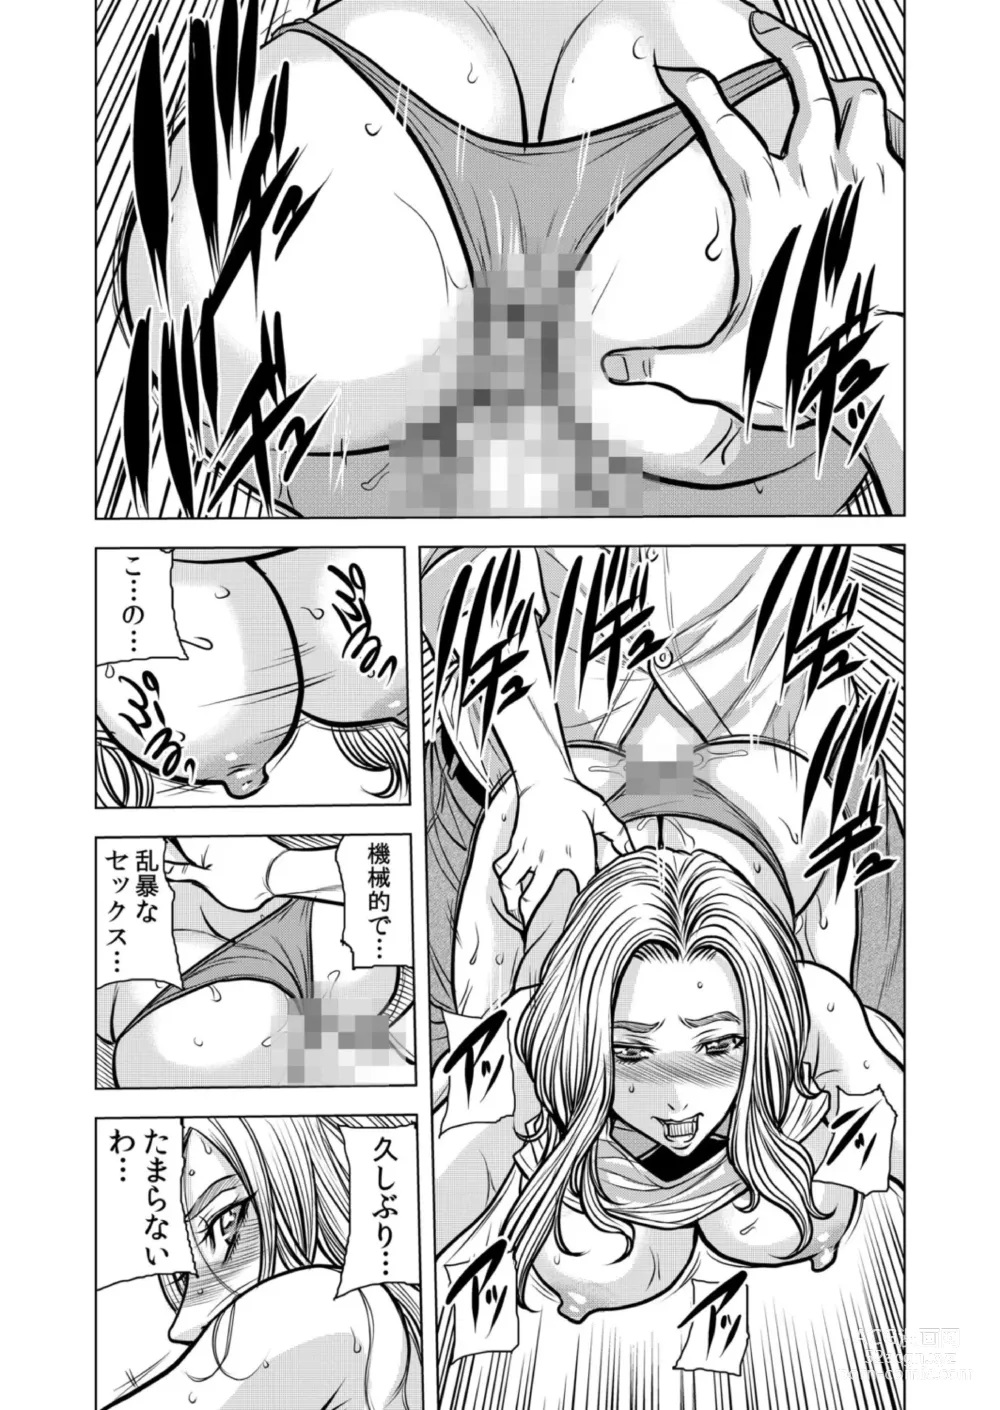 Page 67 of manga Mamasan,yobai ha OK desuka? VOL12